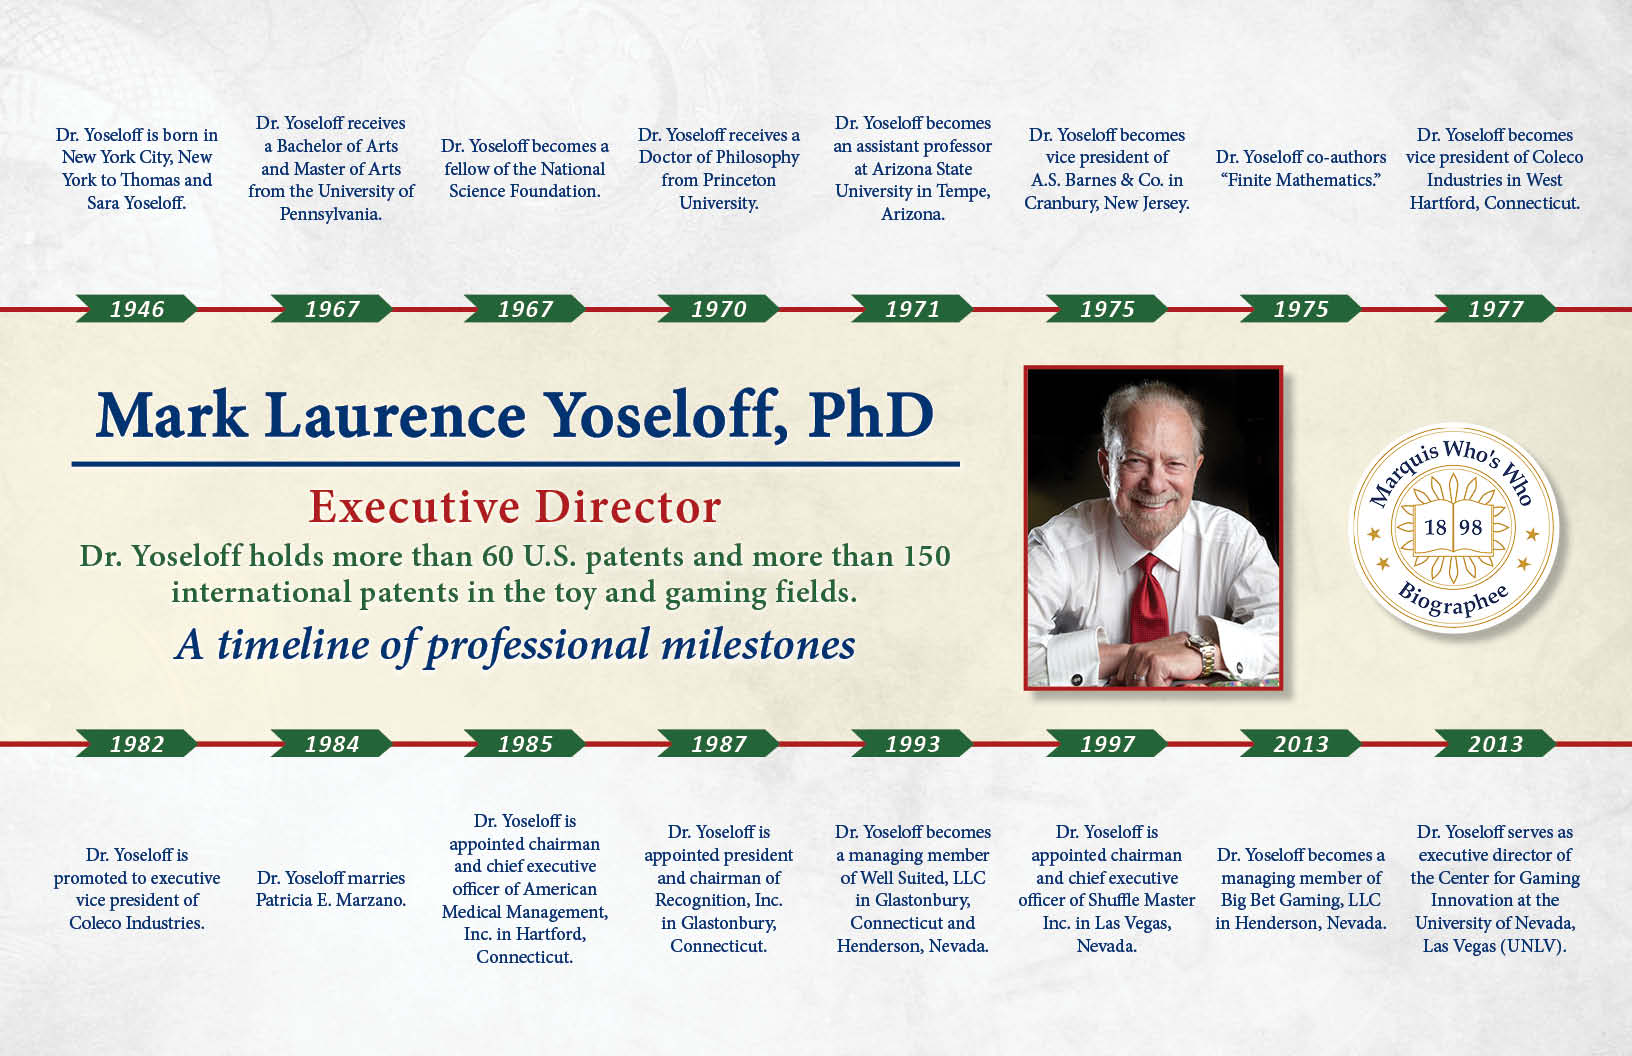 Mark Yoseloff Professional Milestones